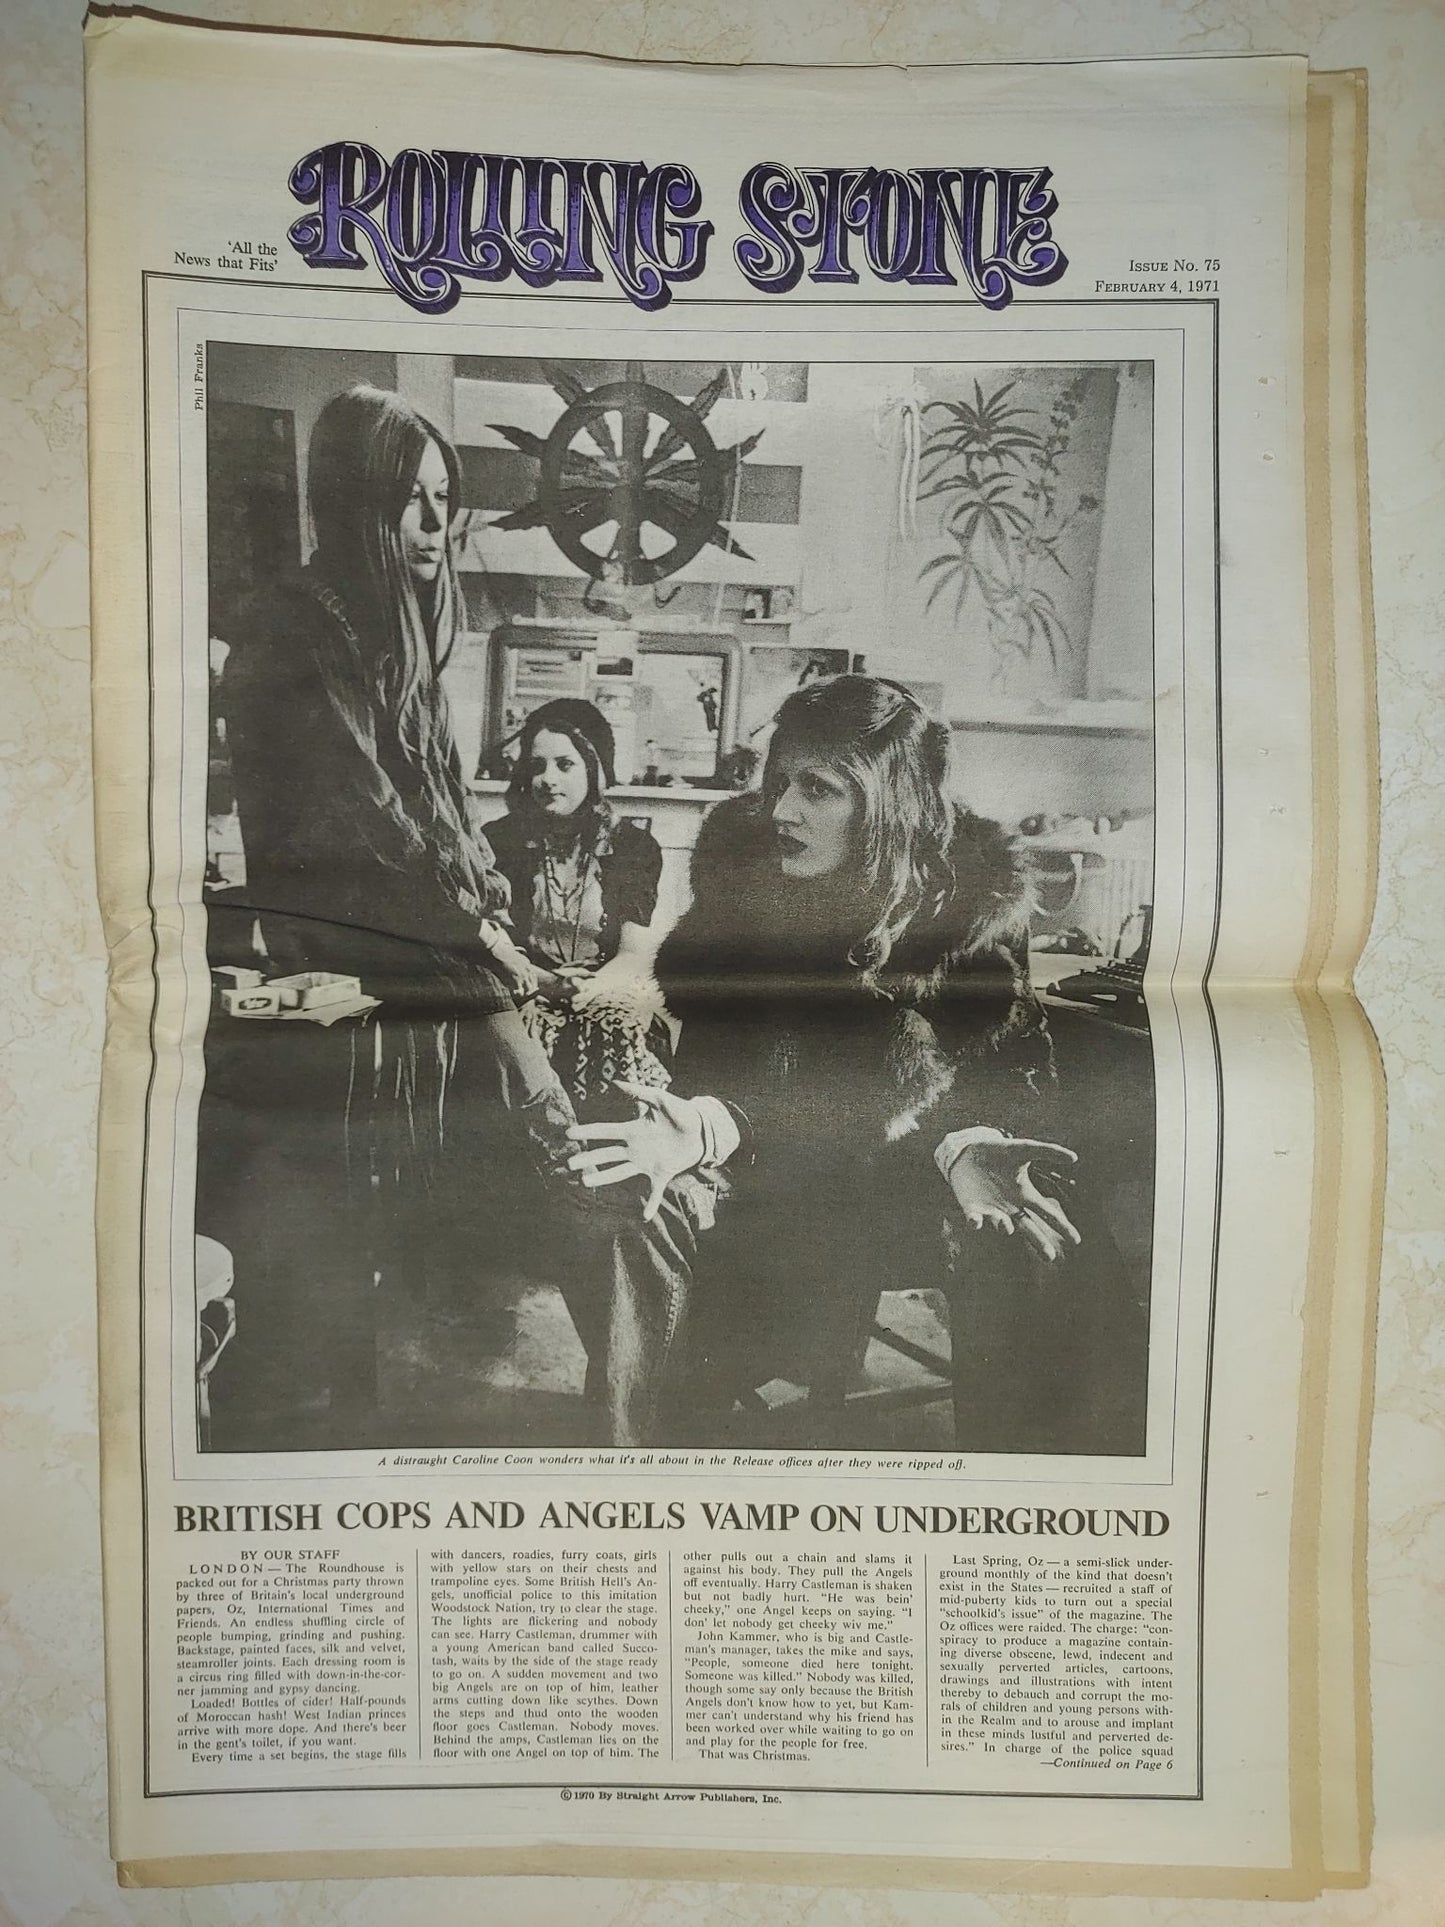 Rolling Stone Magazine Feb. 4, 1970 Issue #75 John Lennon